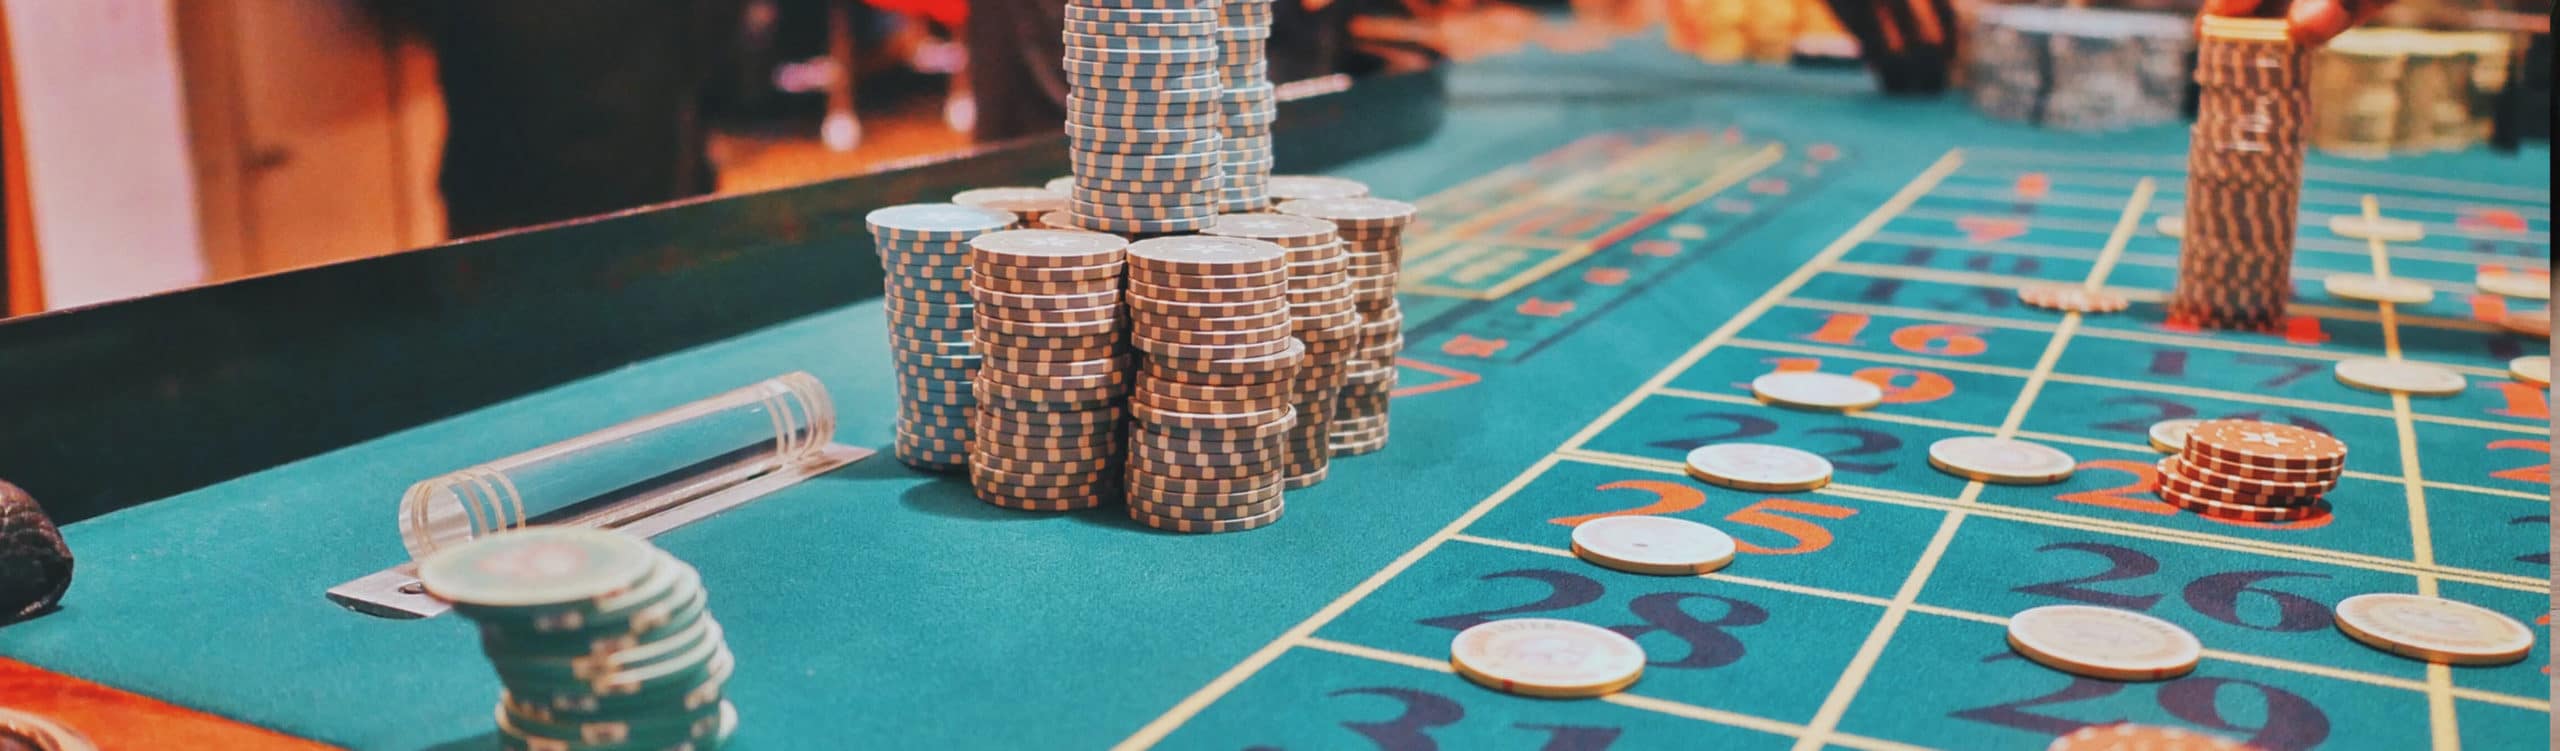 craps table in a casino